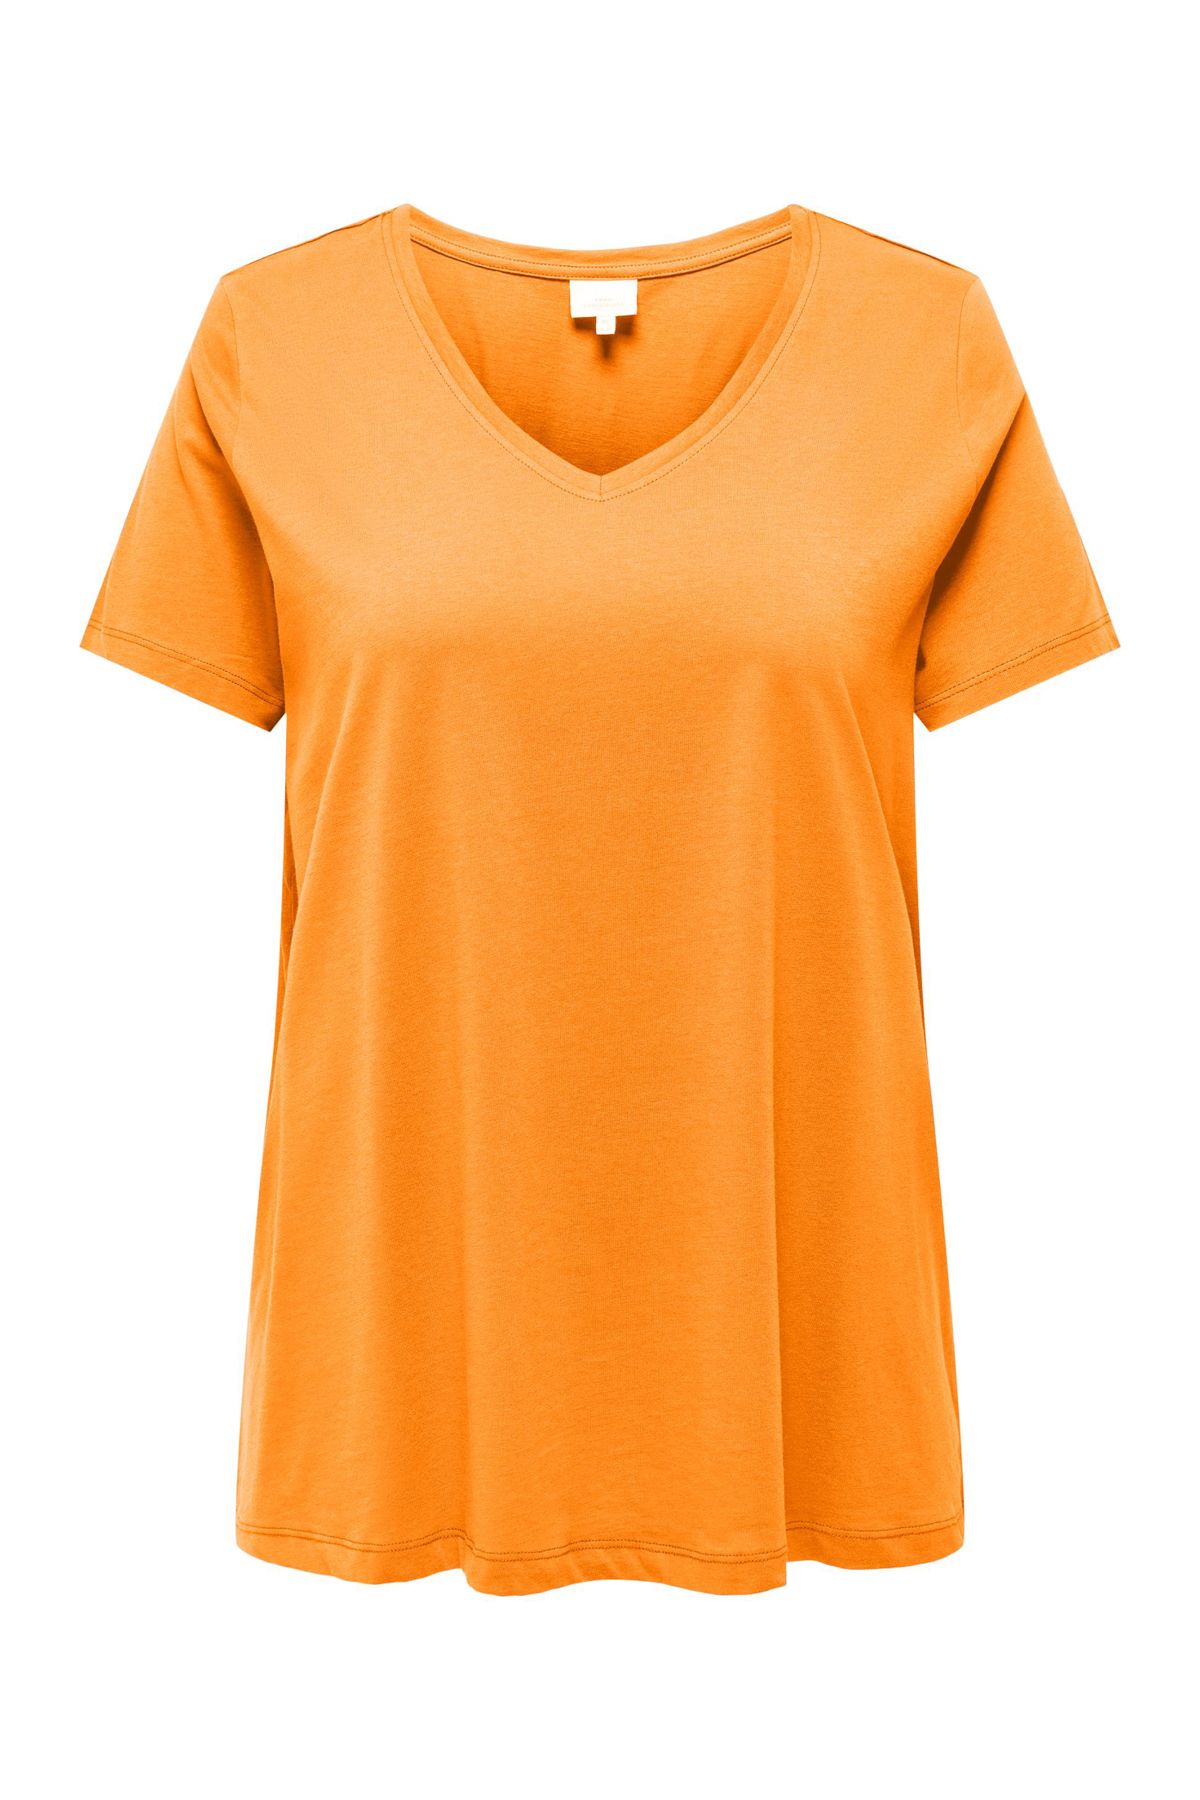 Only Carmakoma T-Shirt - Orange - Regular fit - Trendyol